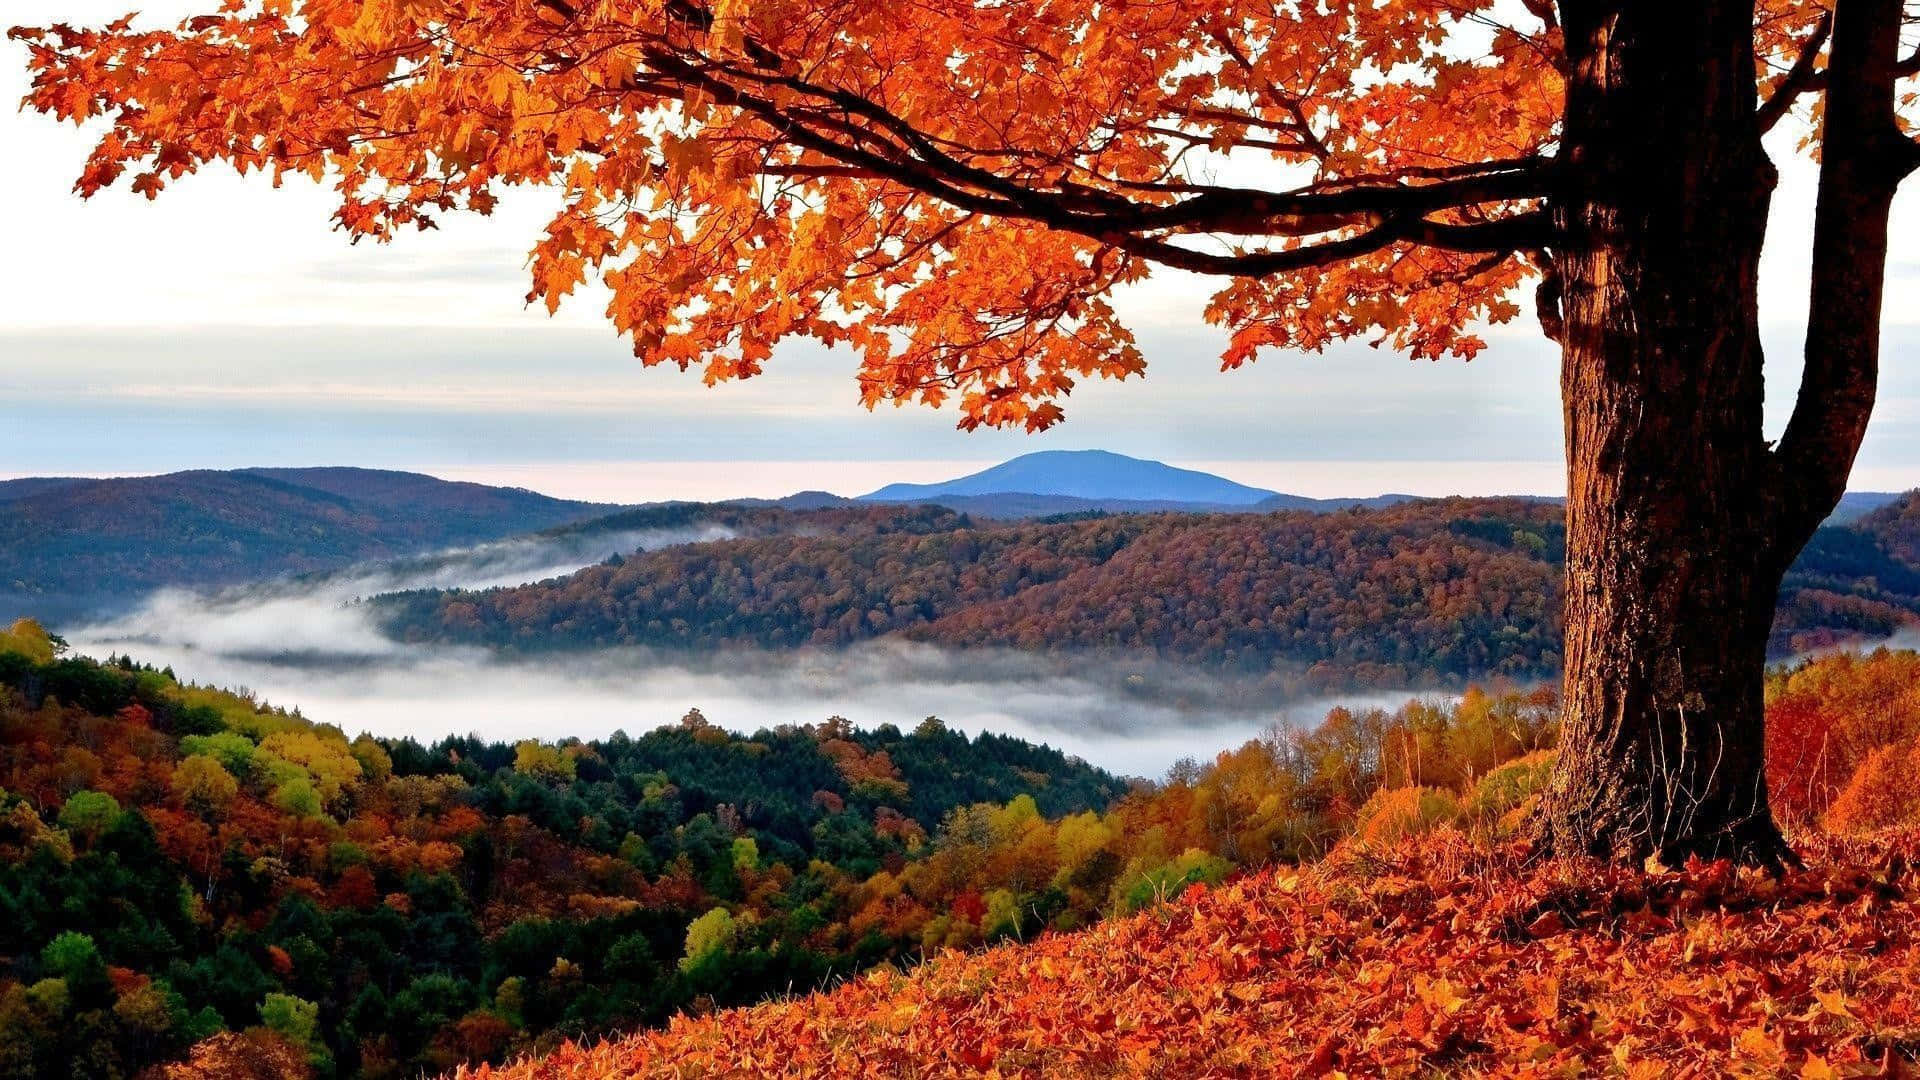 Vibrant High-Resolution Fall Scenery